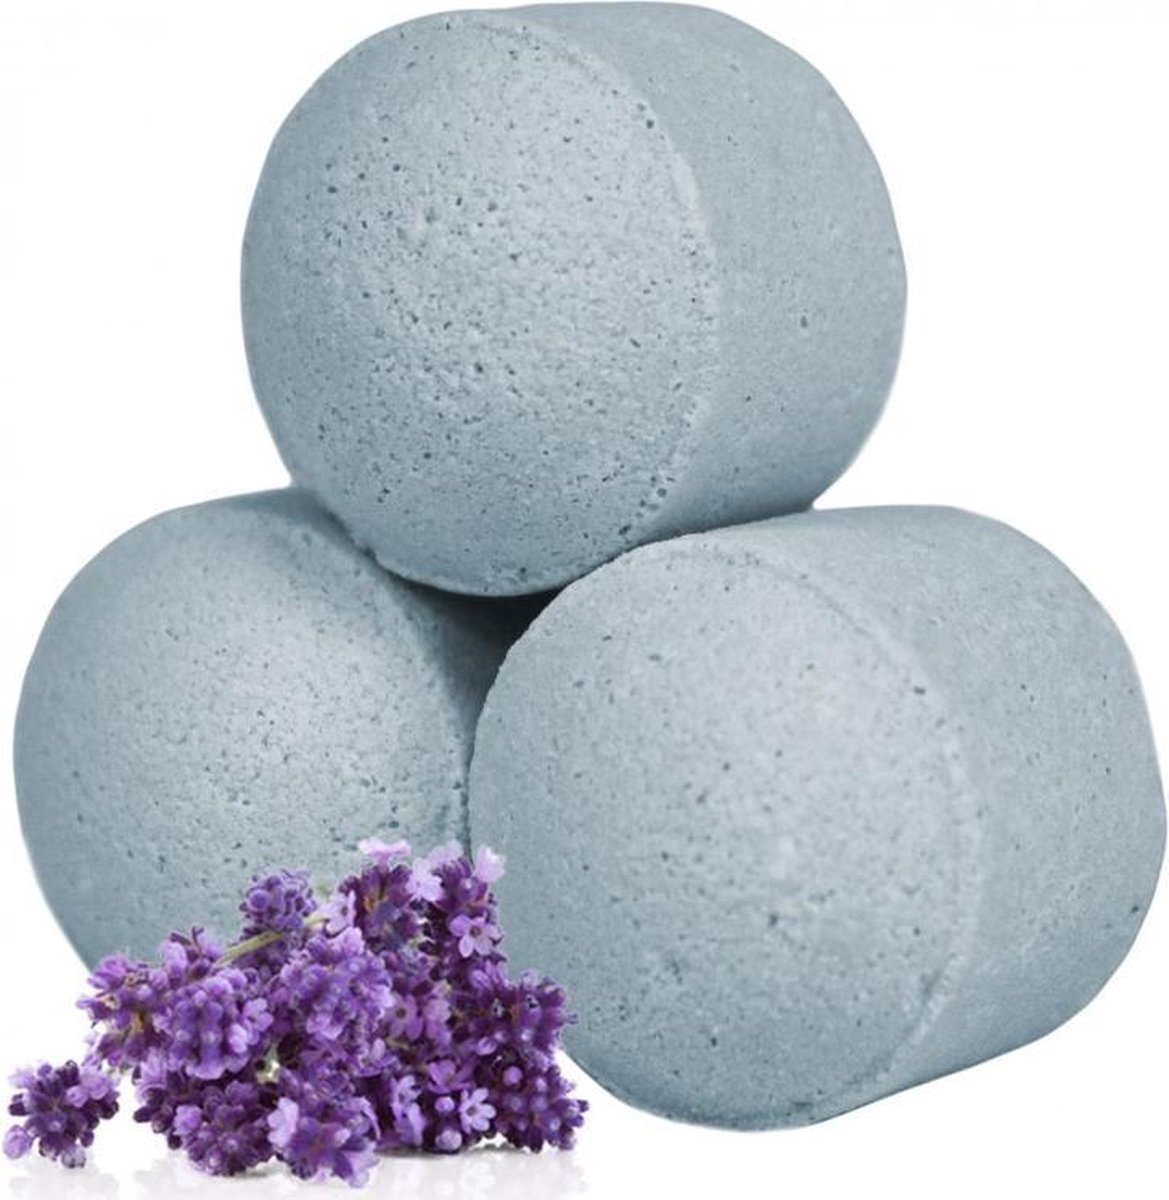 Mini Bruisballen Lavendel - Chill Pills - 15 stuks - 2.5cm p/s - Kleine Badbommen